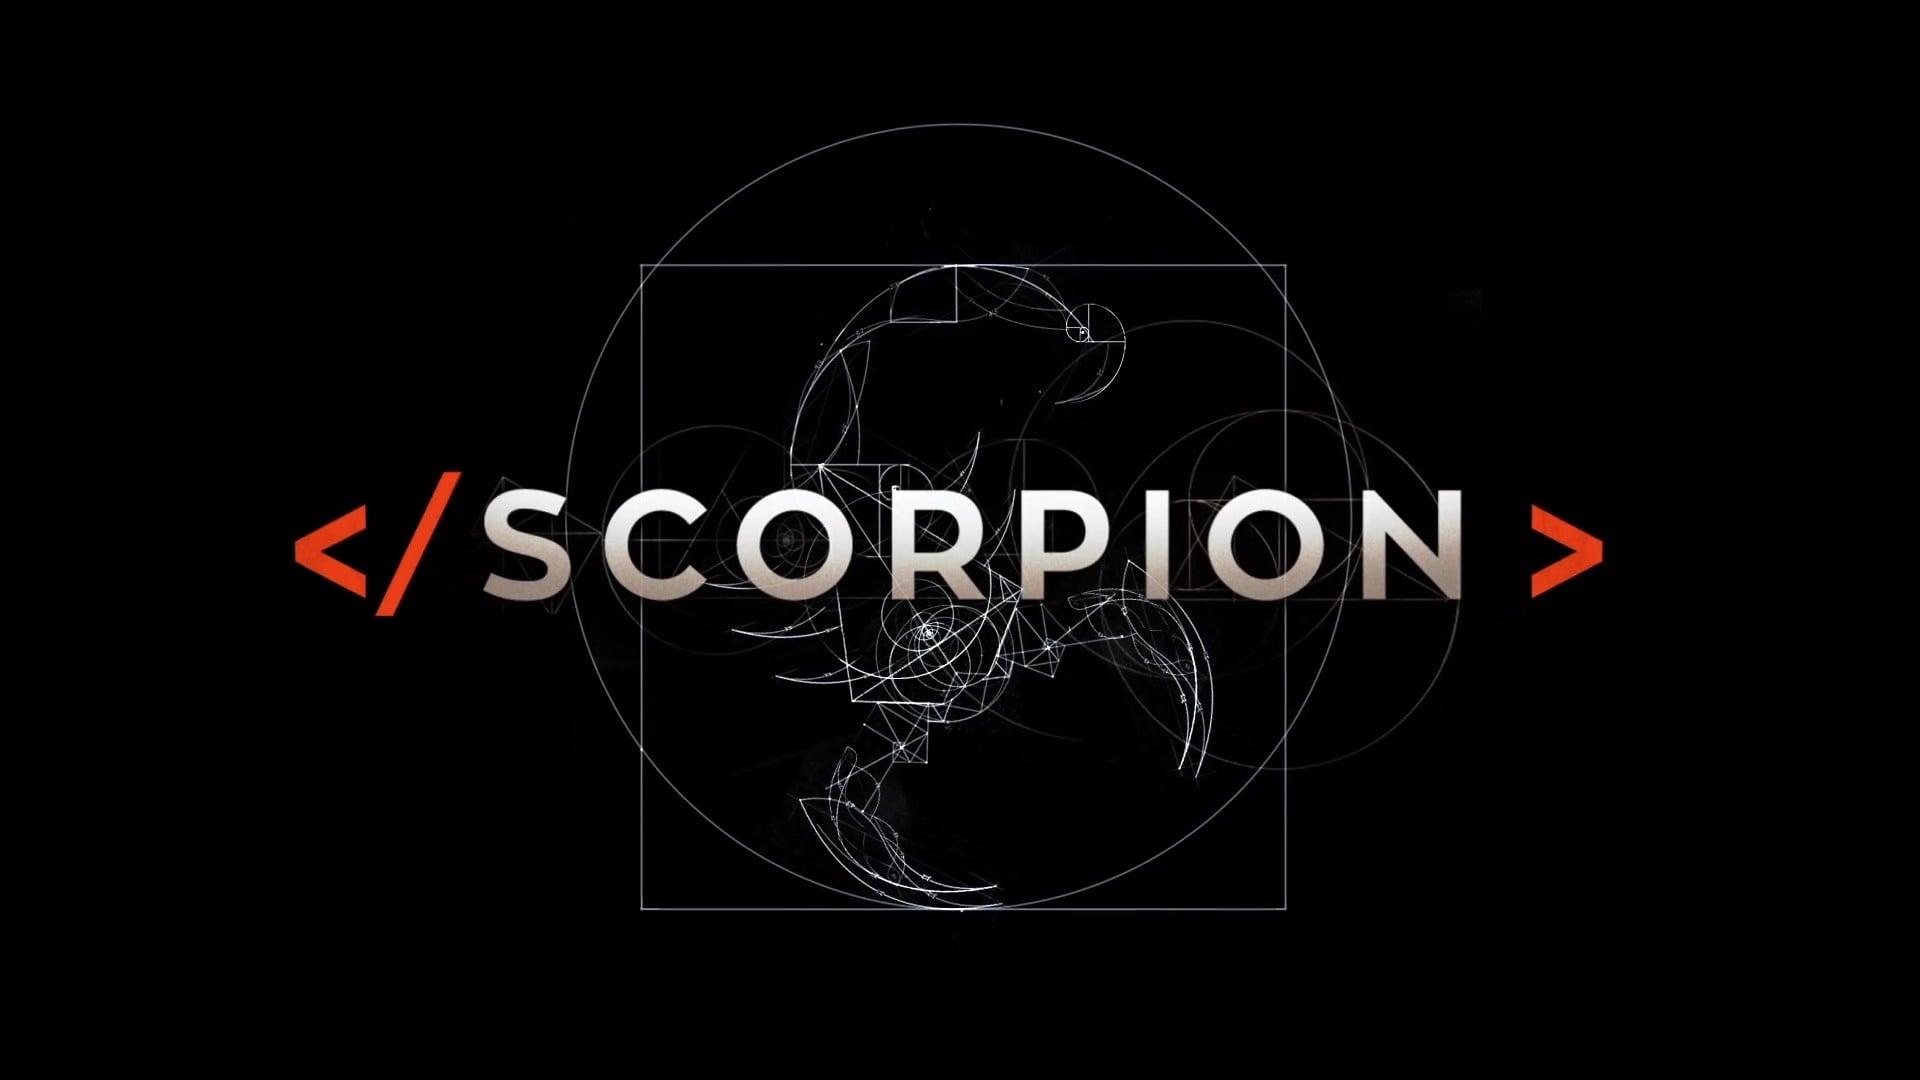 Scorpion Desktop Wallpaper